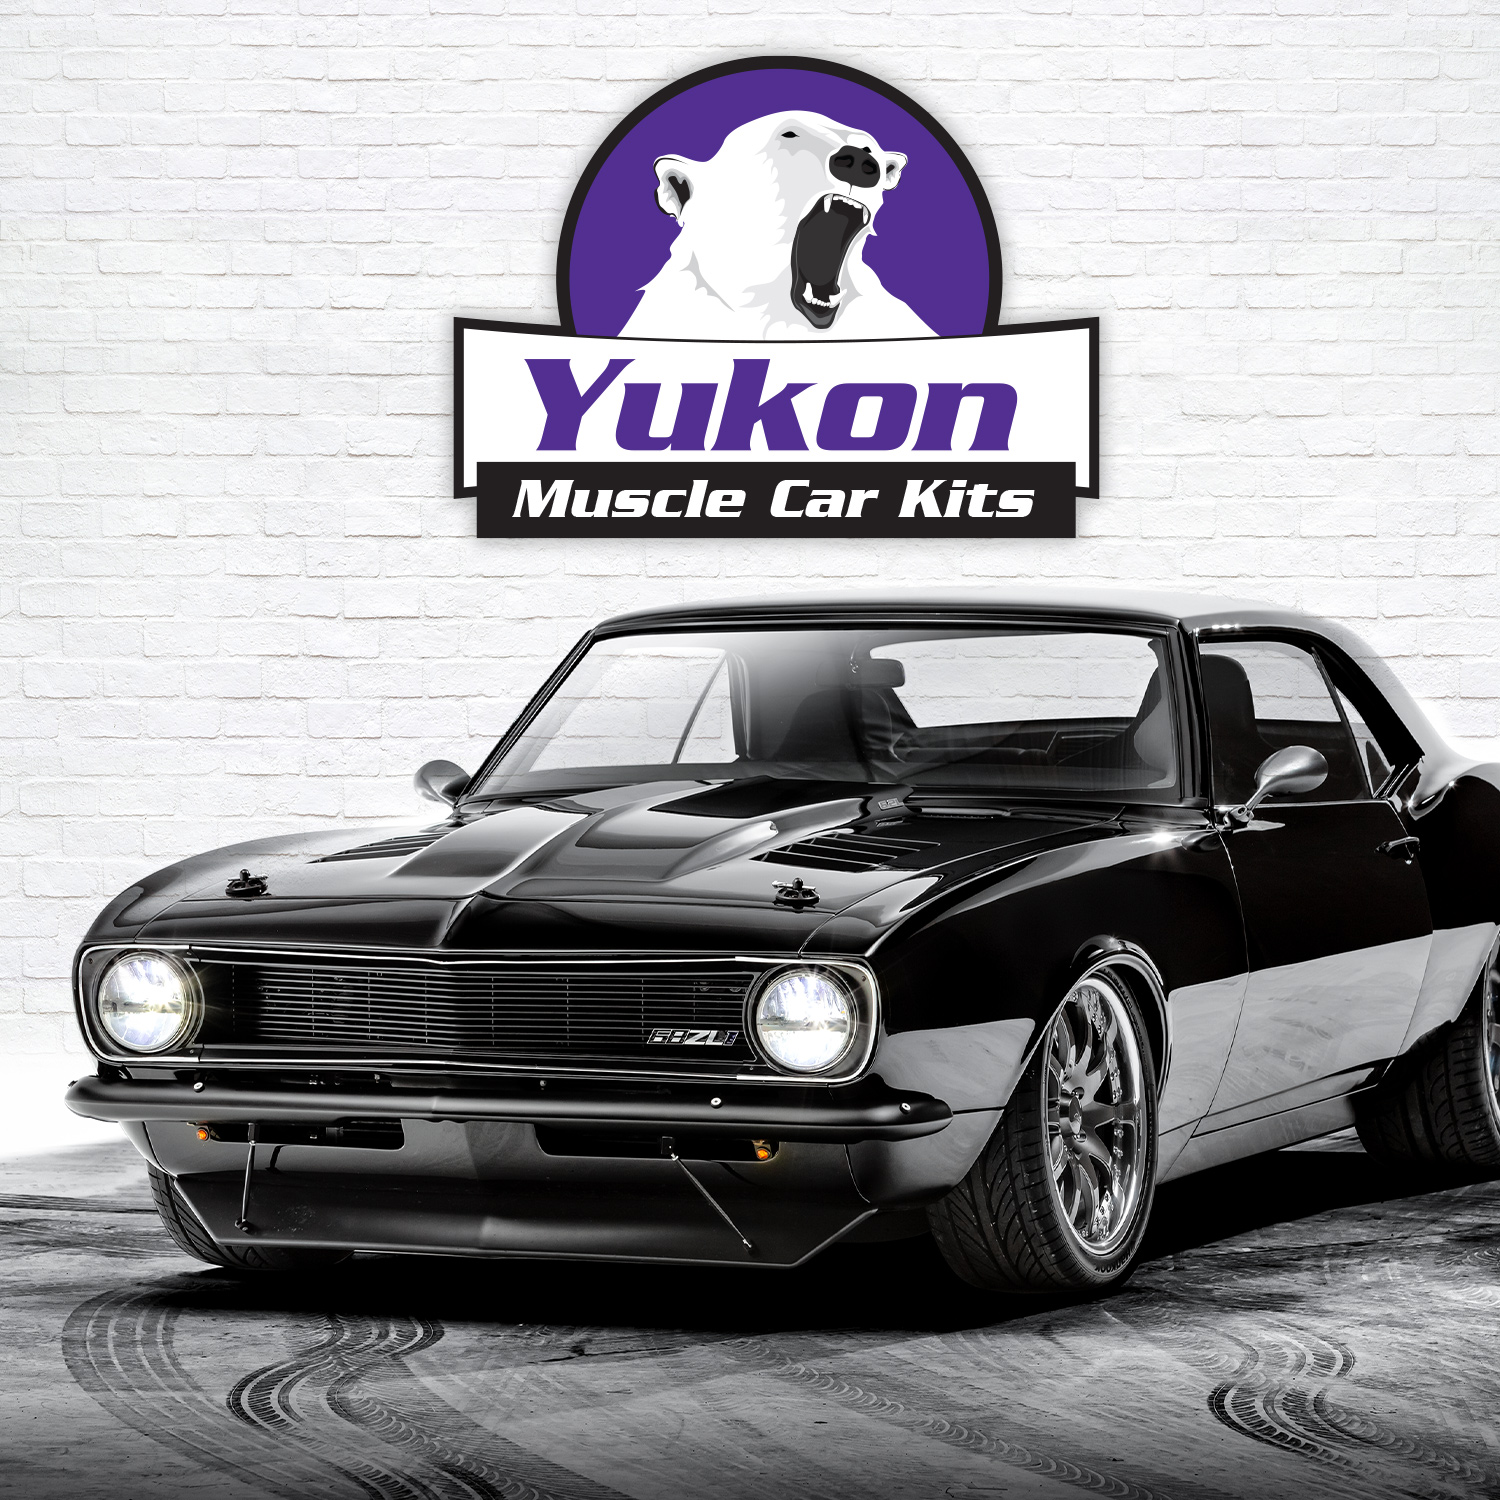 Yukon Muscle Car Limited Slip & Re-Gear Kit for GM 55P, 17 spline, 3.08 ratio